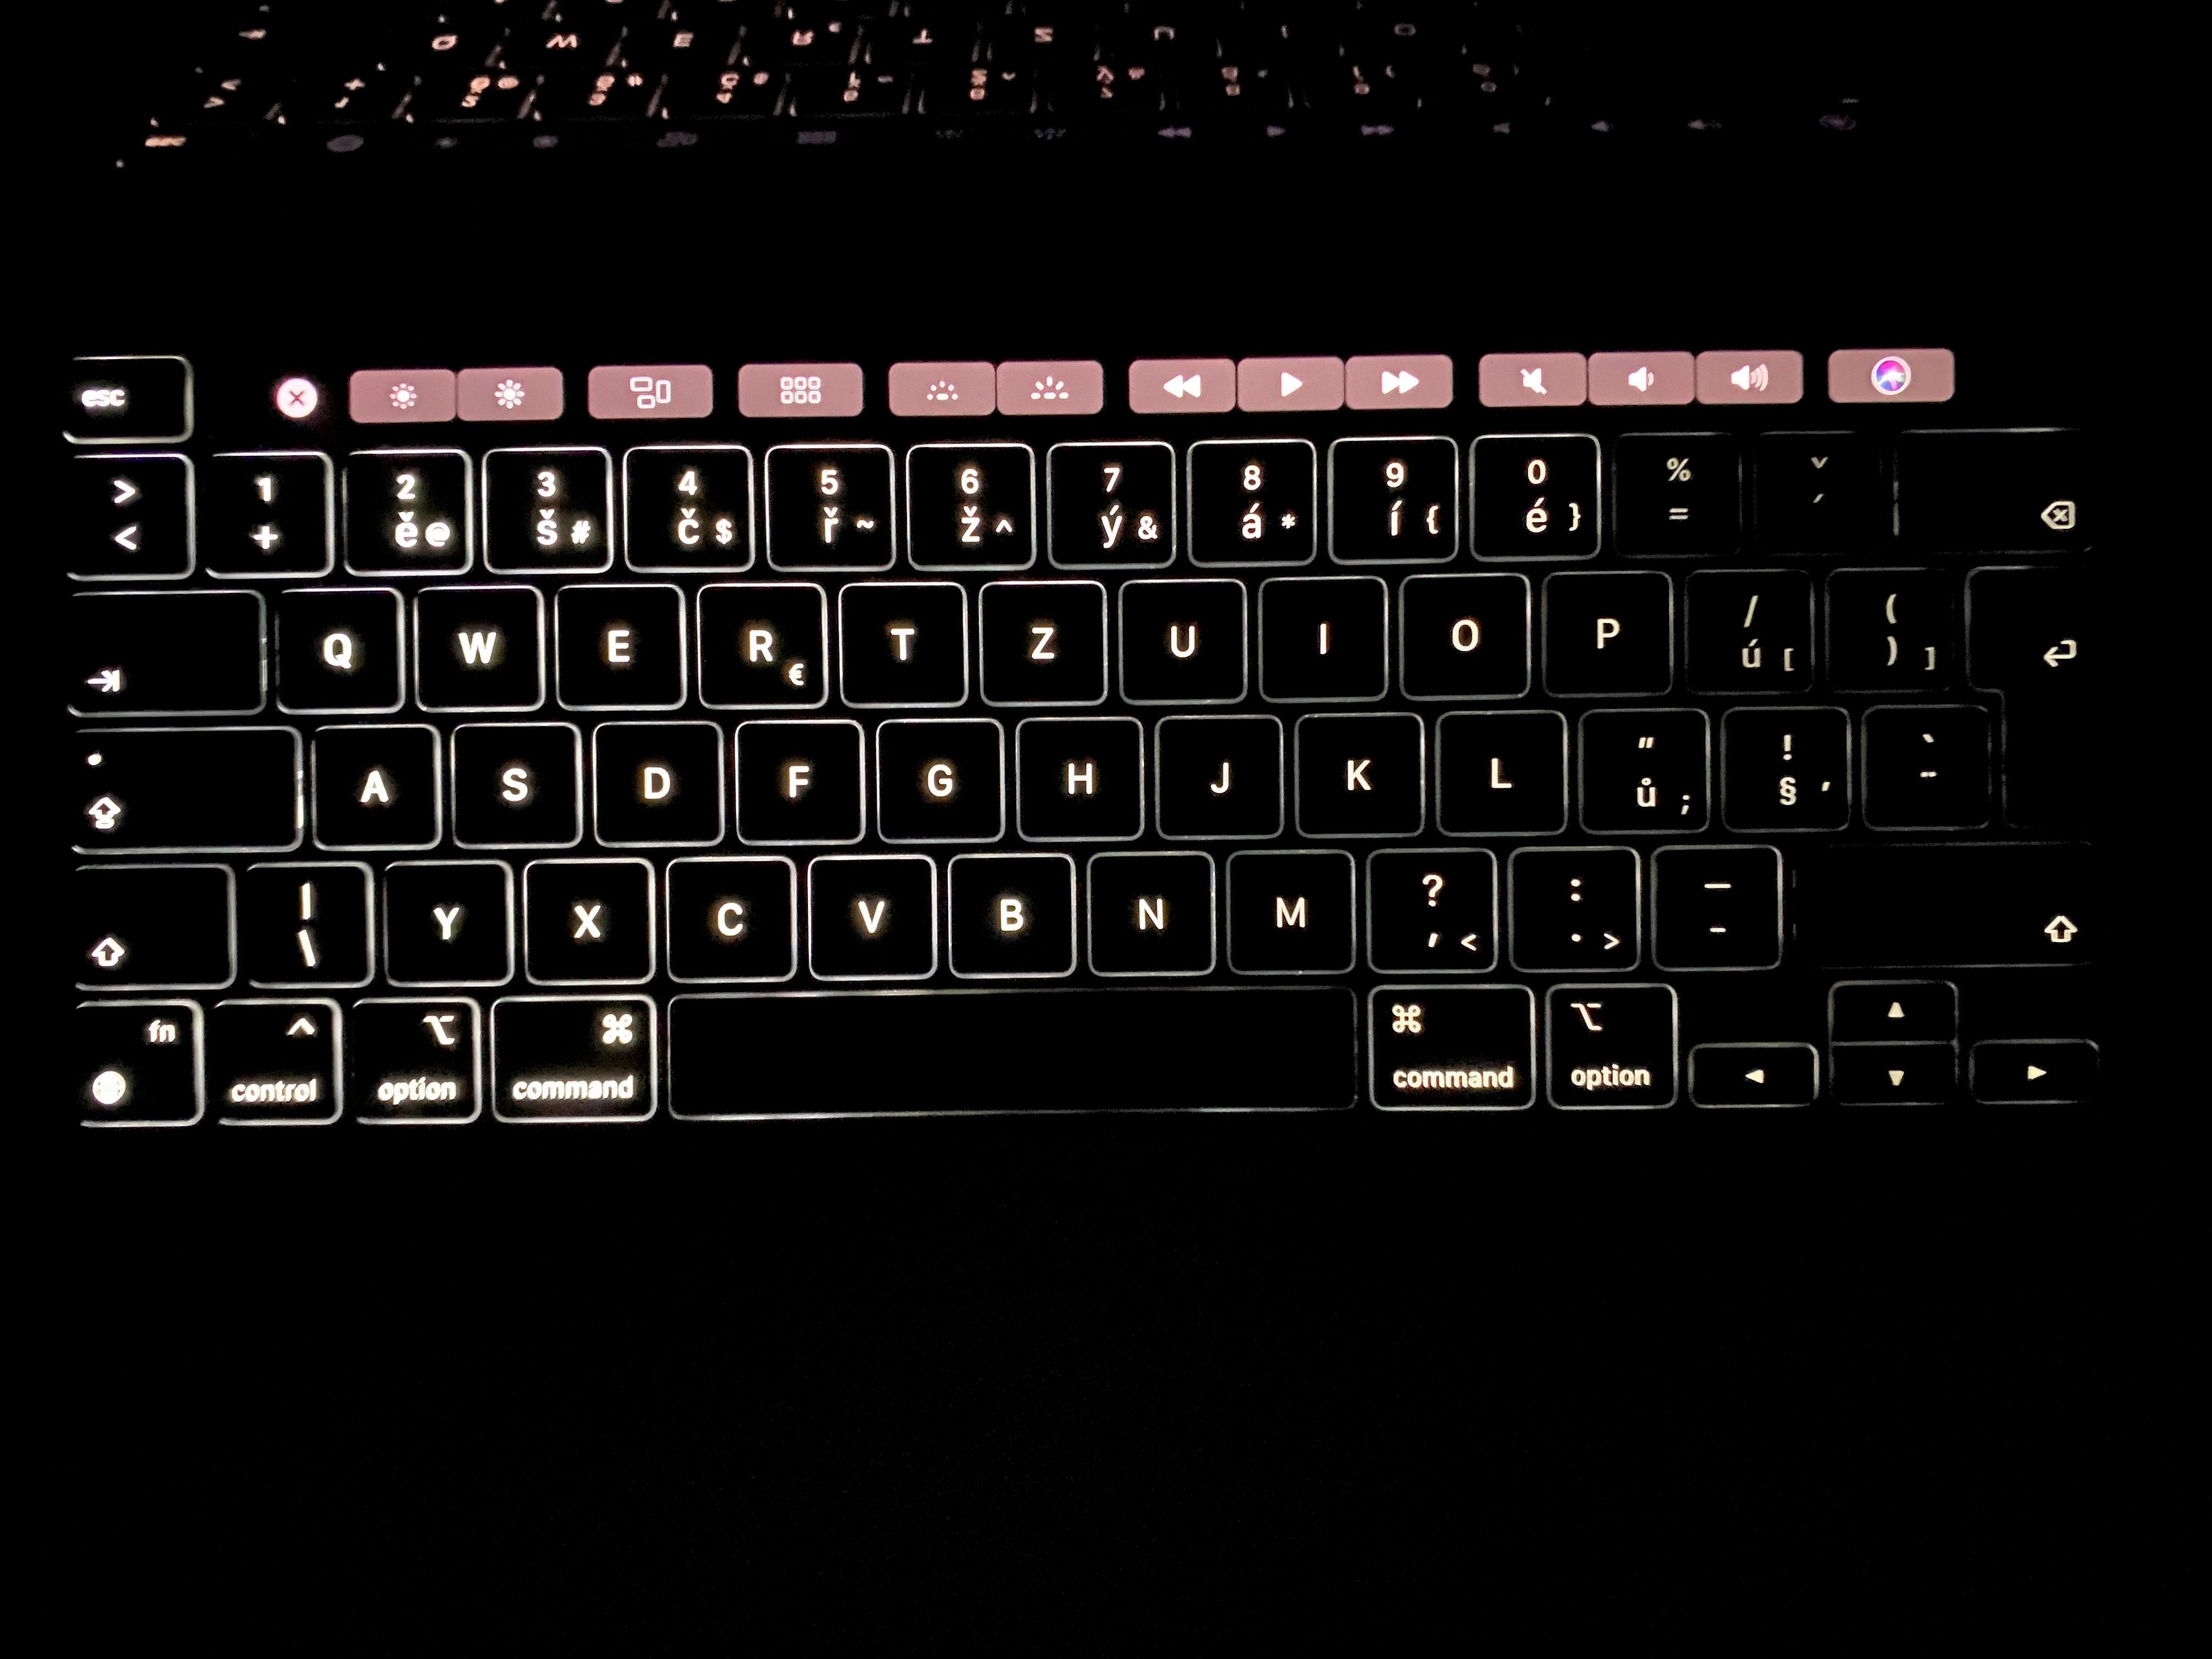 light up keyboard on macbook pro